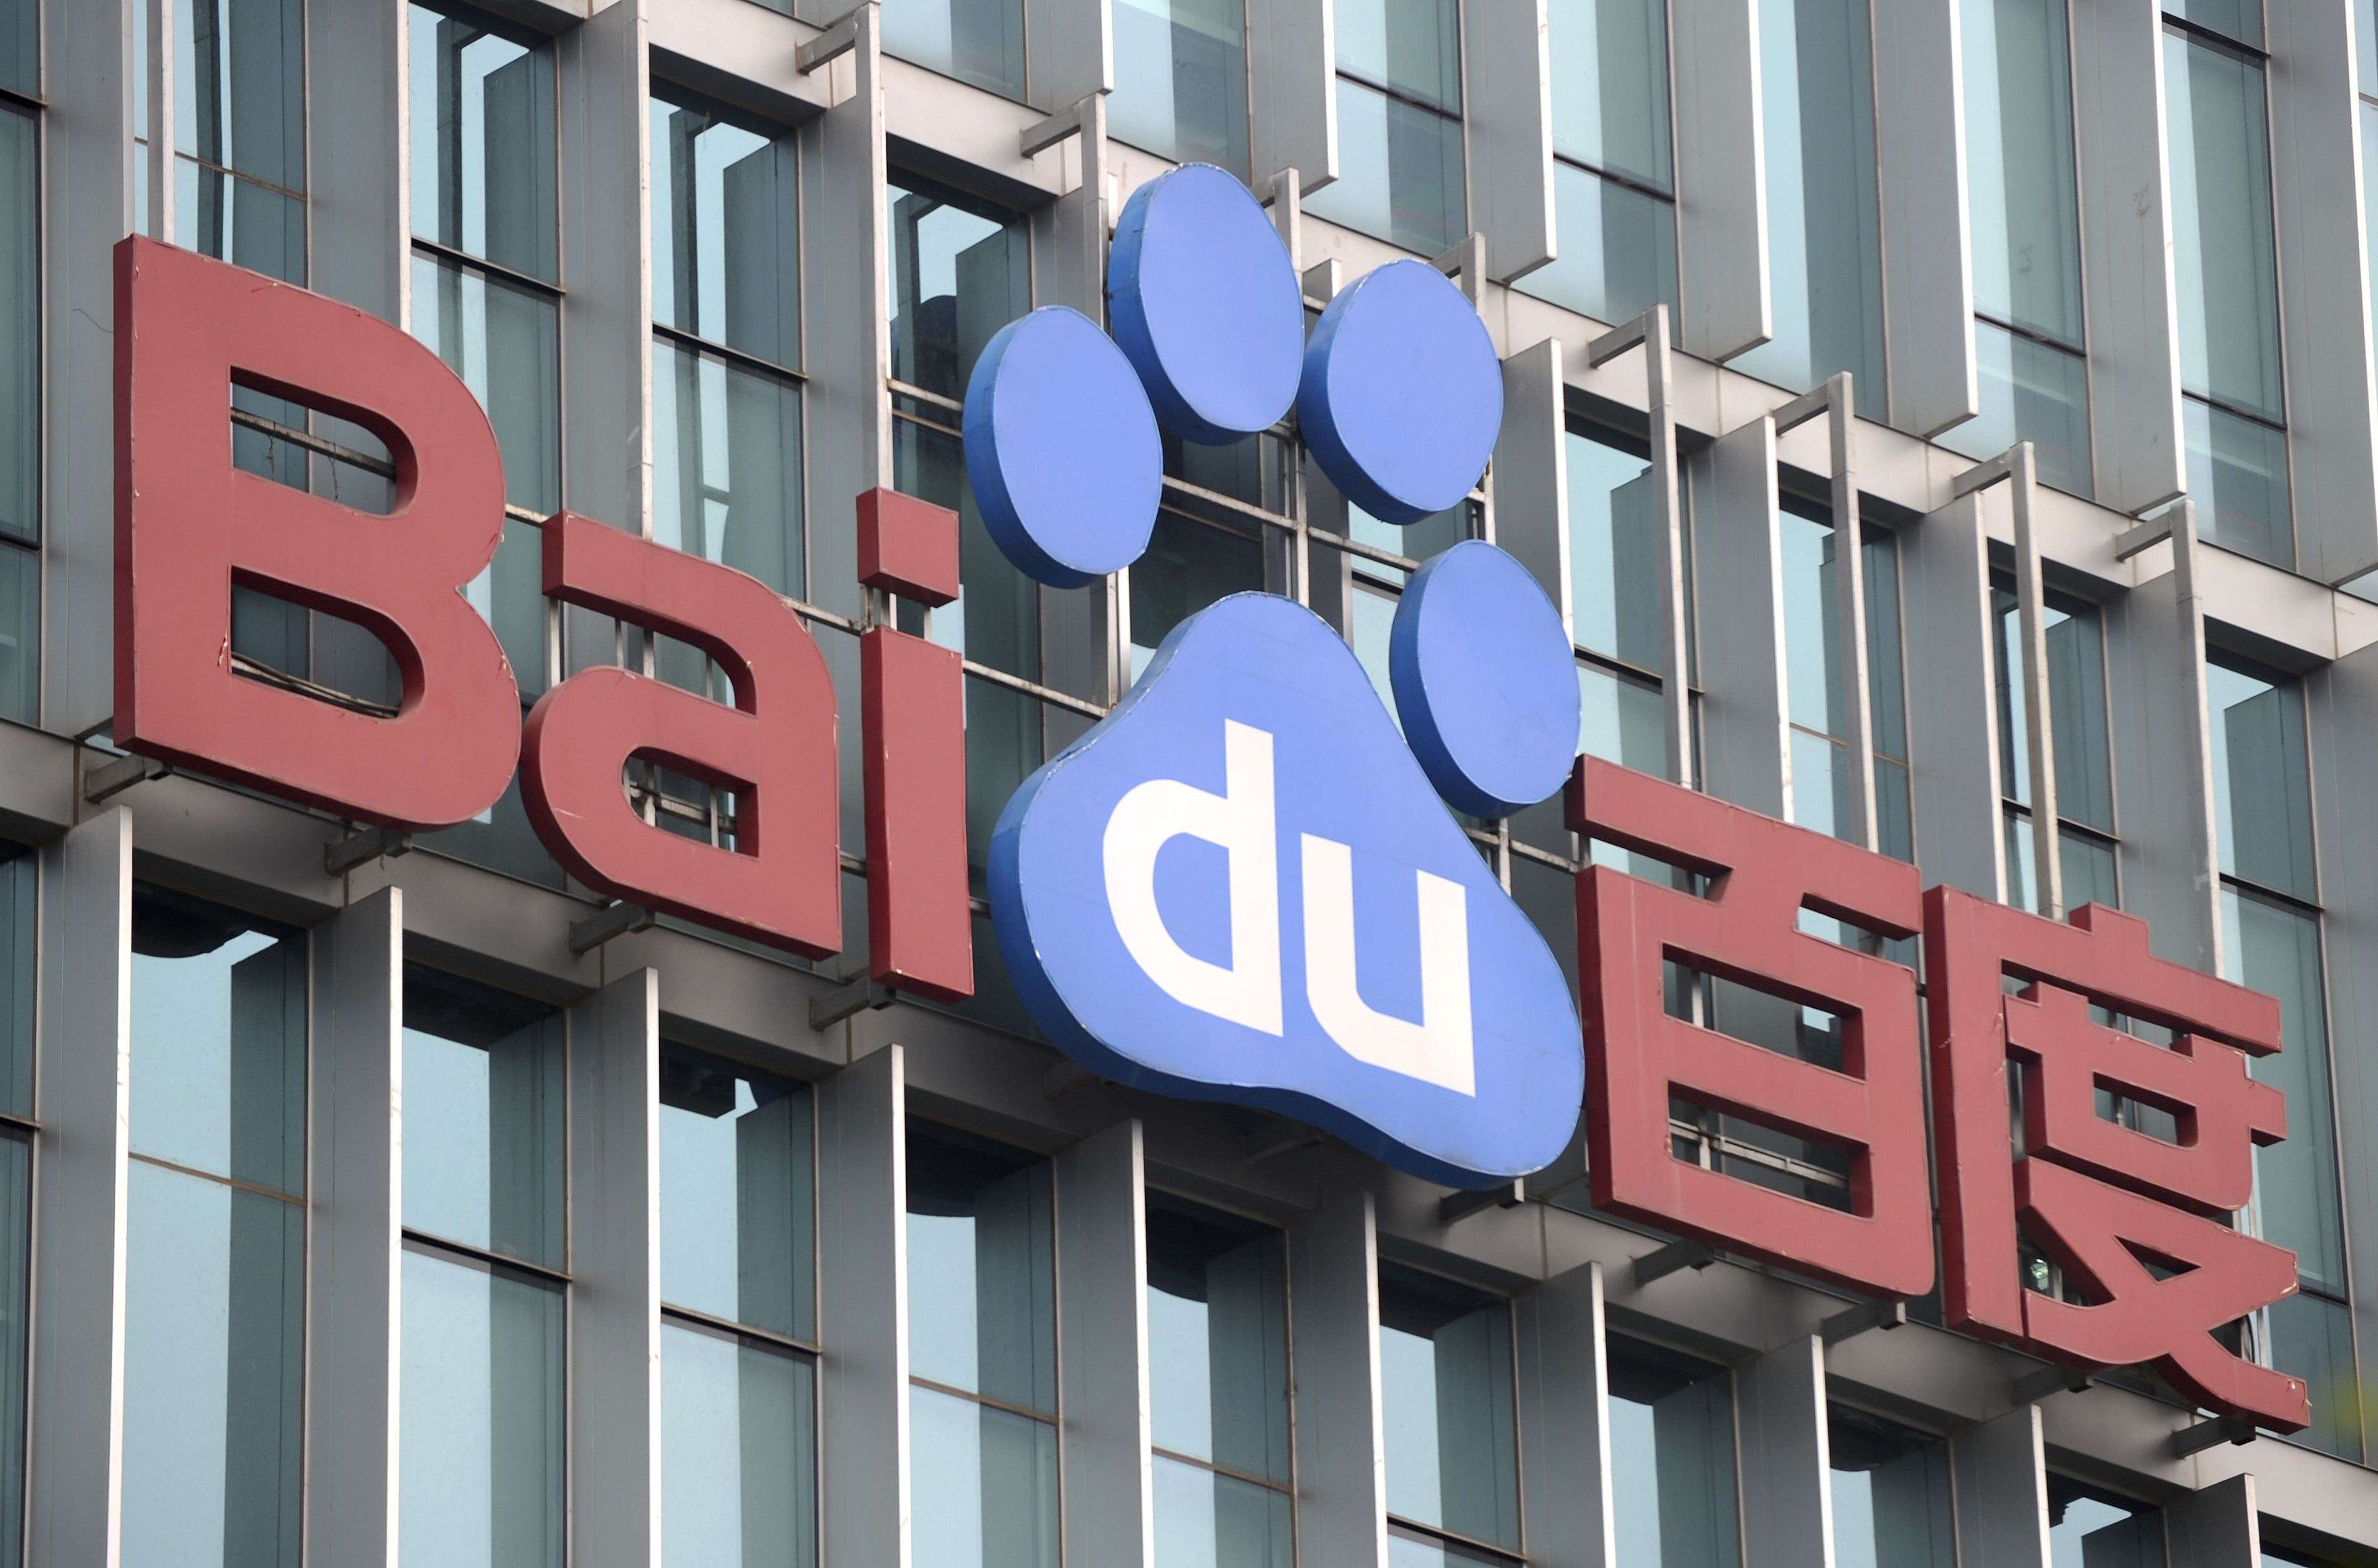 The Baidu logo outside its headquarters in Beijing. Photo: AFP